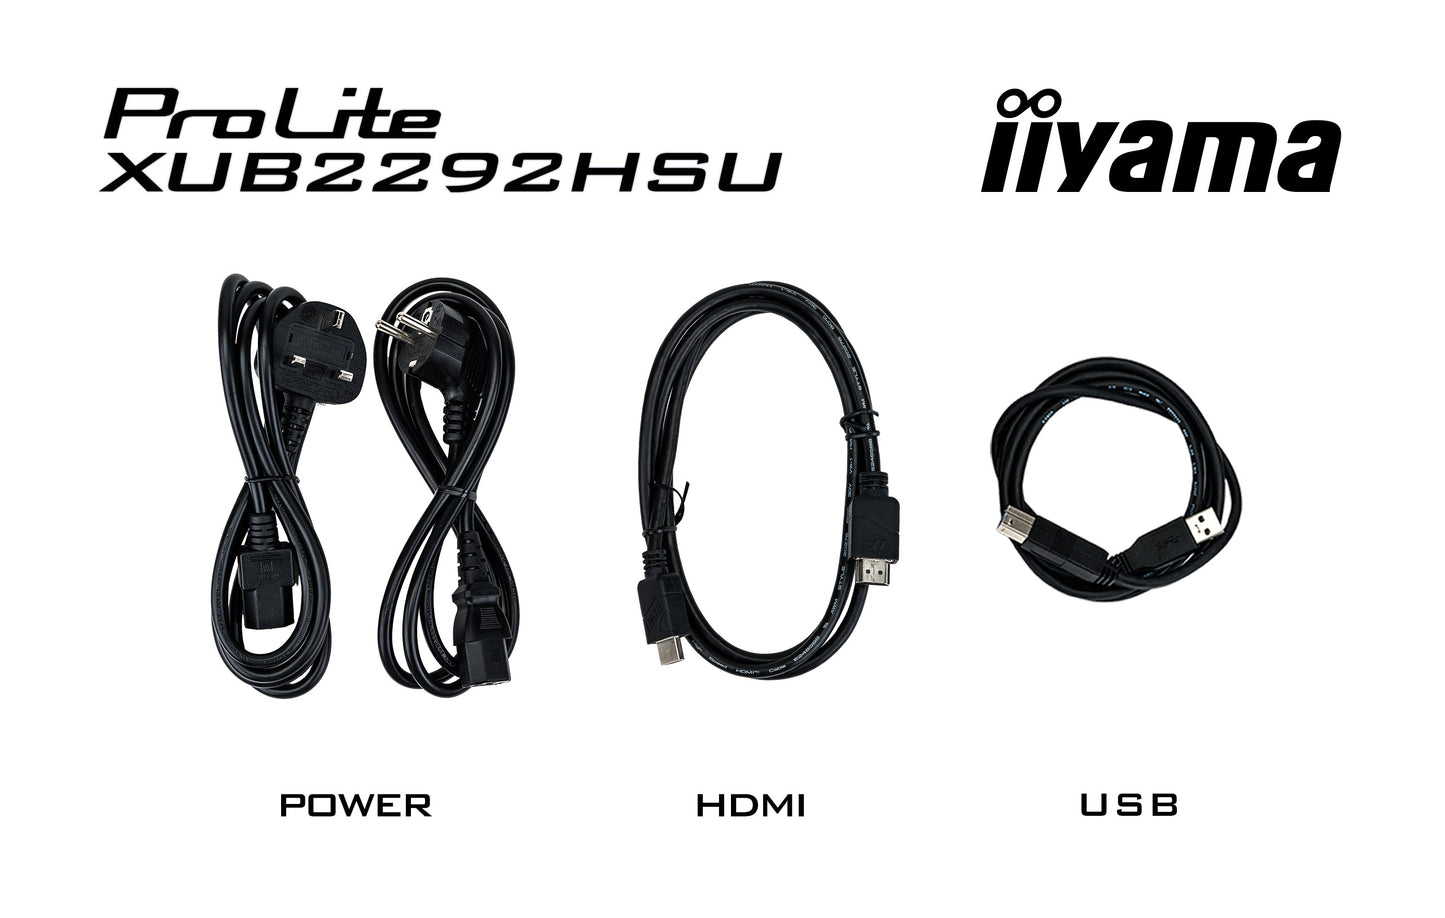 iiyama ProLite XUB2292HSU-B6 21.5" 100Hz IPS Display with Height Adjust Stand